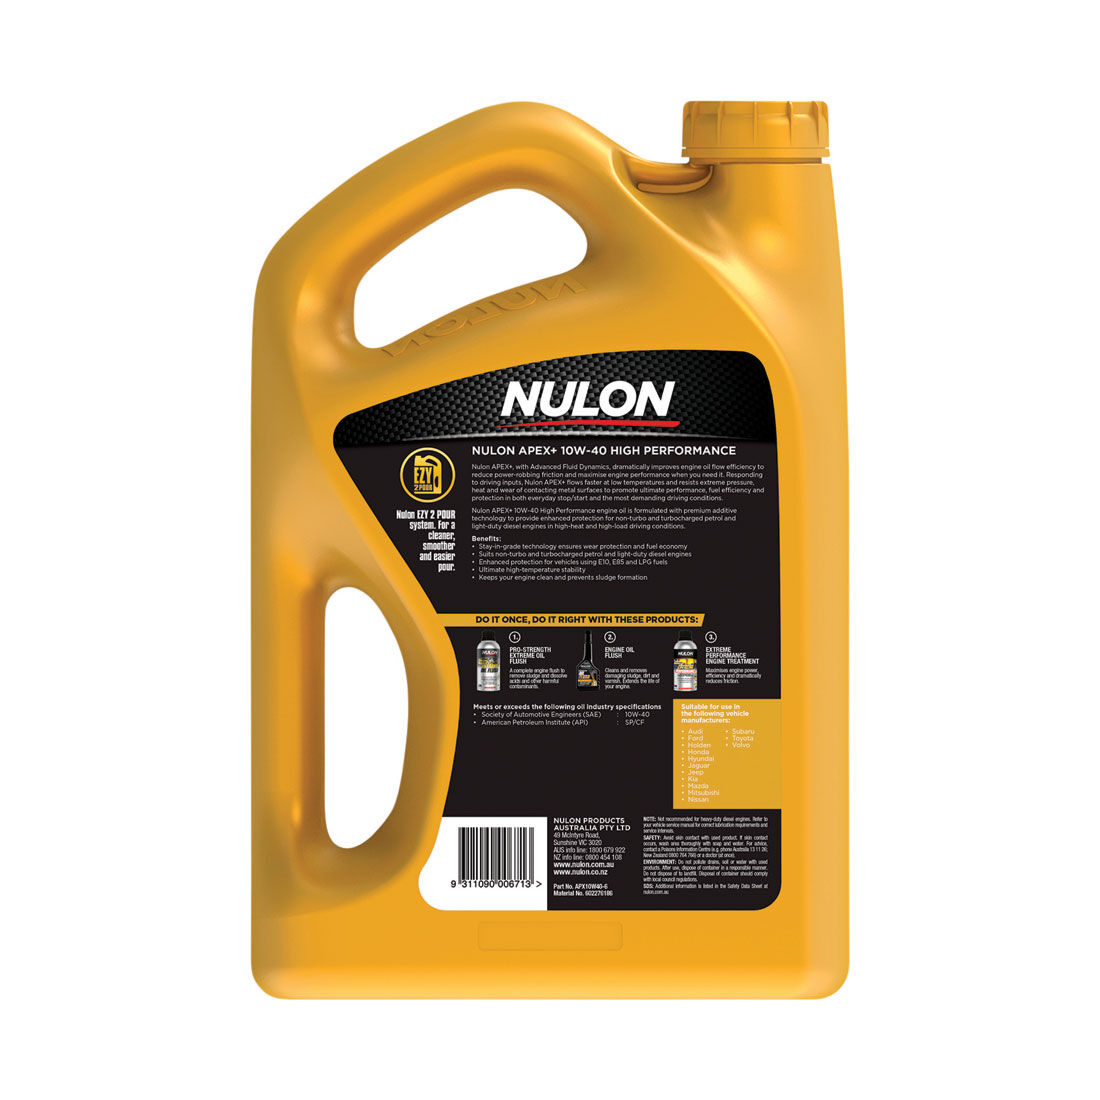 Nulon APEX+ 10W-40 High Performance Engine Oil 6 Litre, , scaau_hi-res